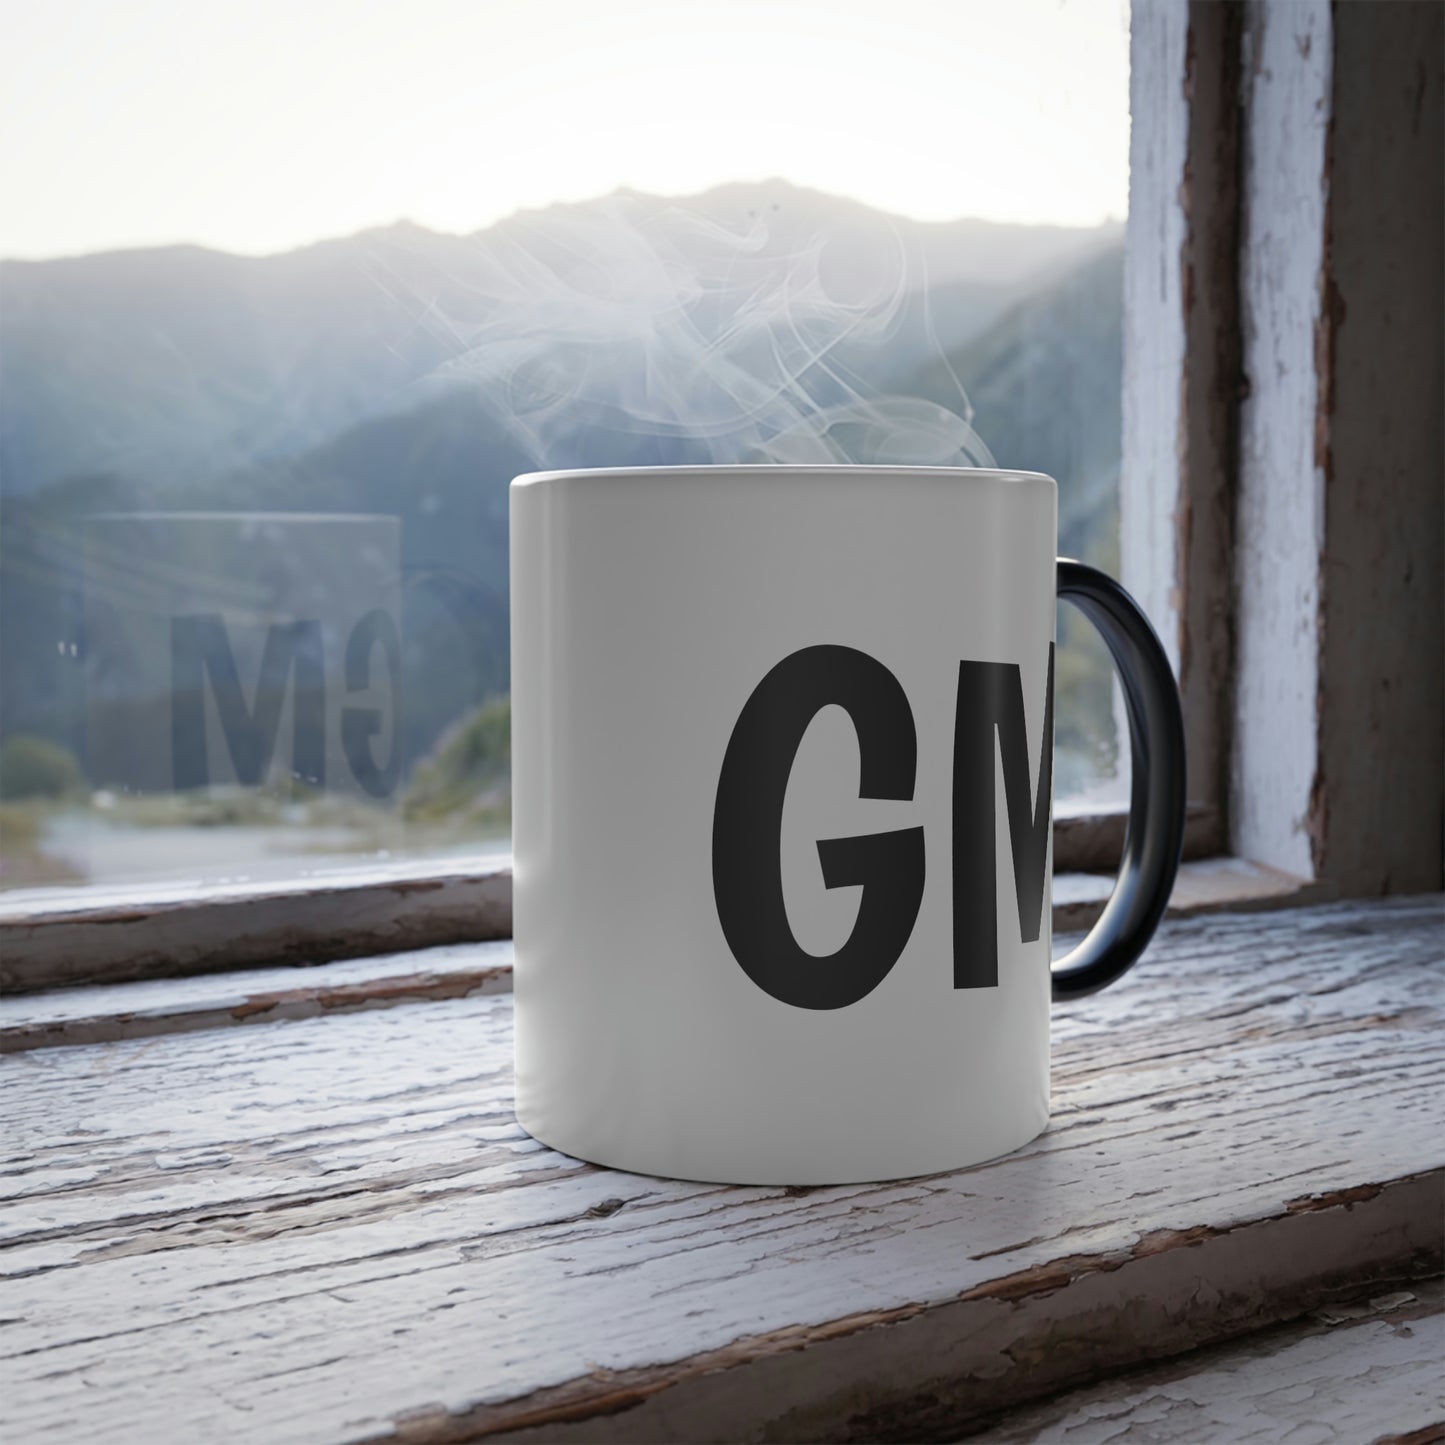 First Coffee, Then GM Mug